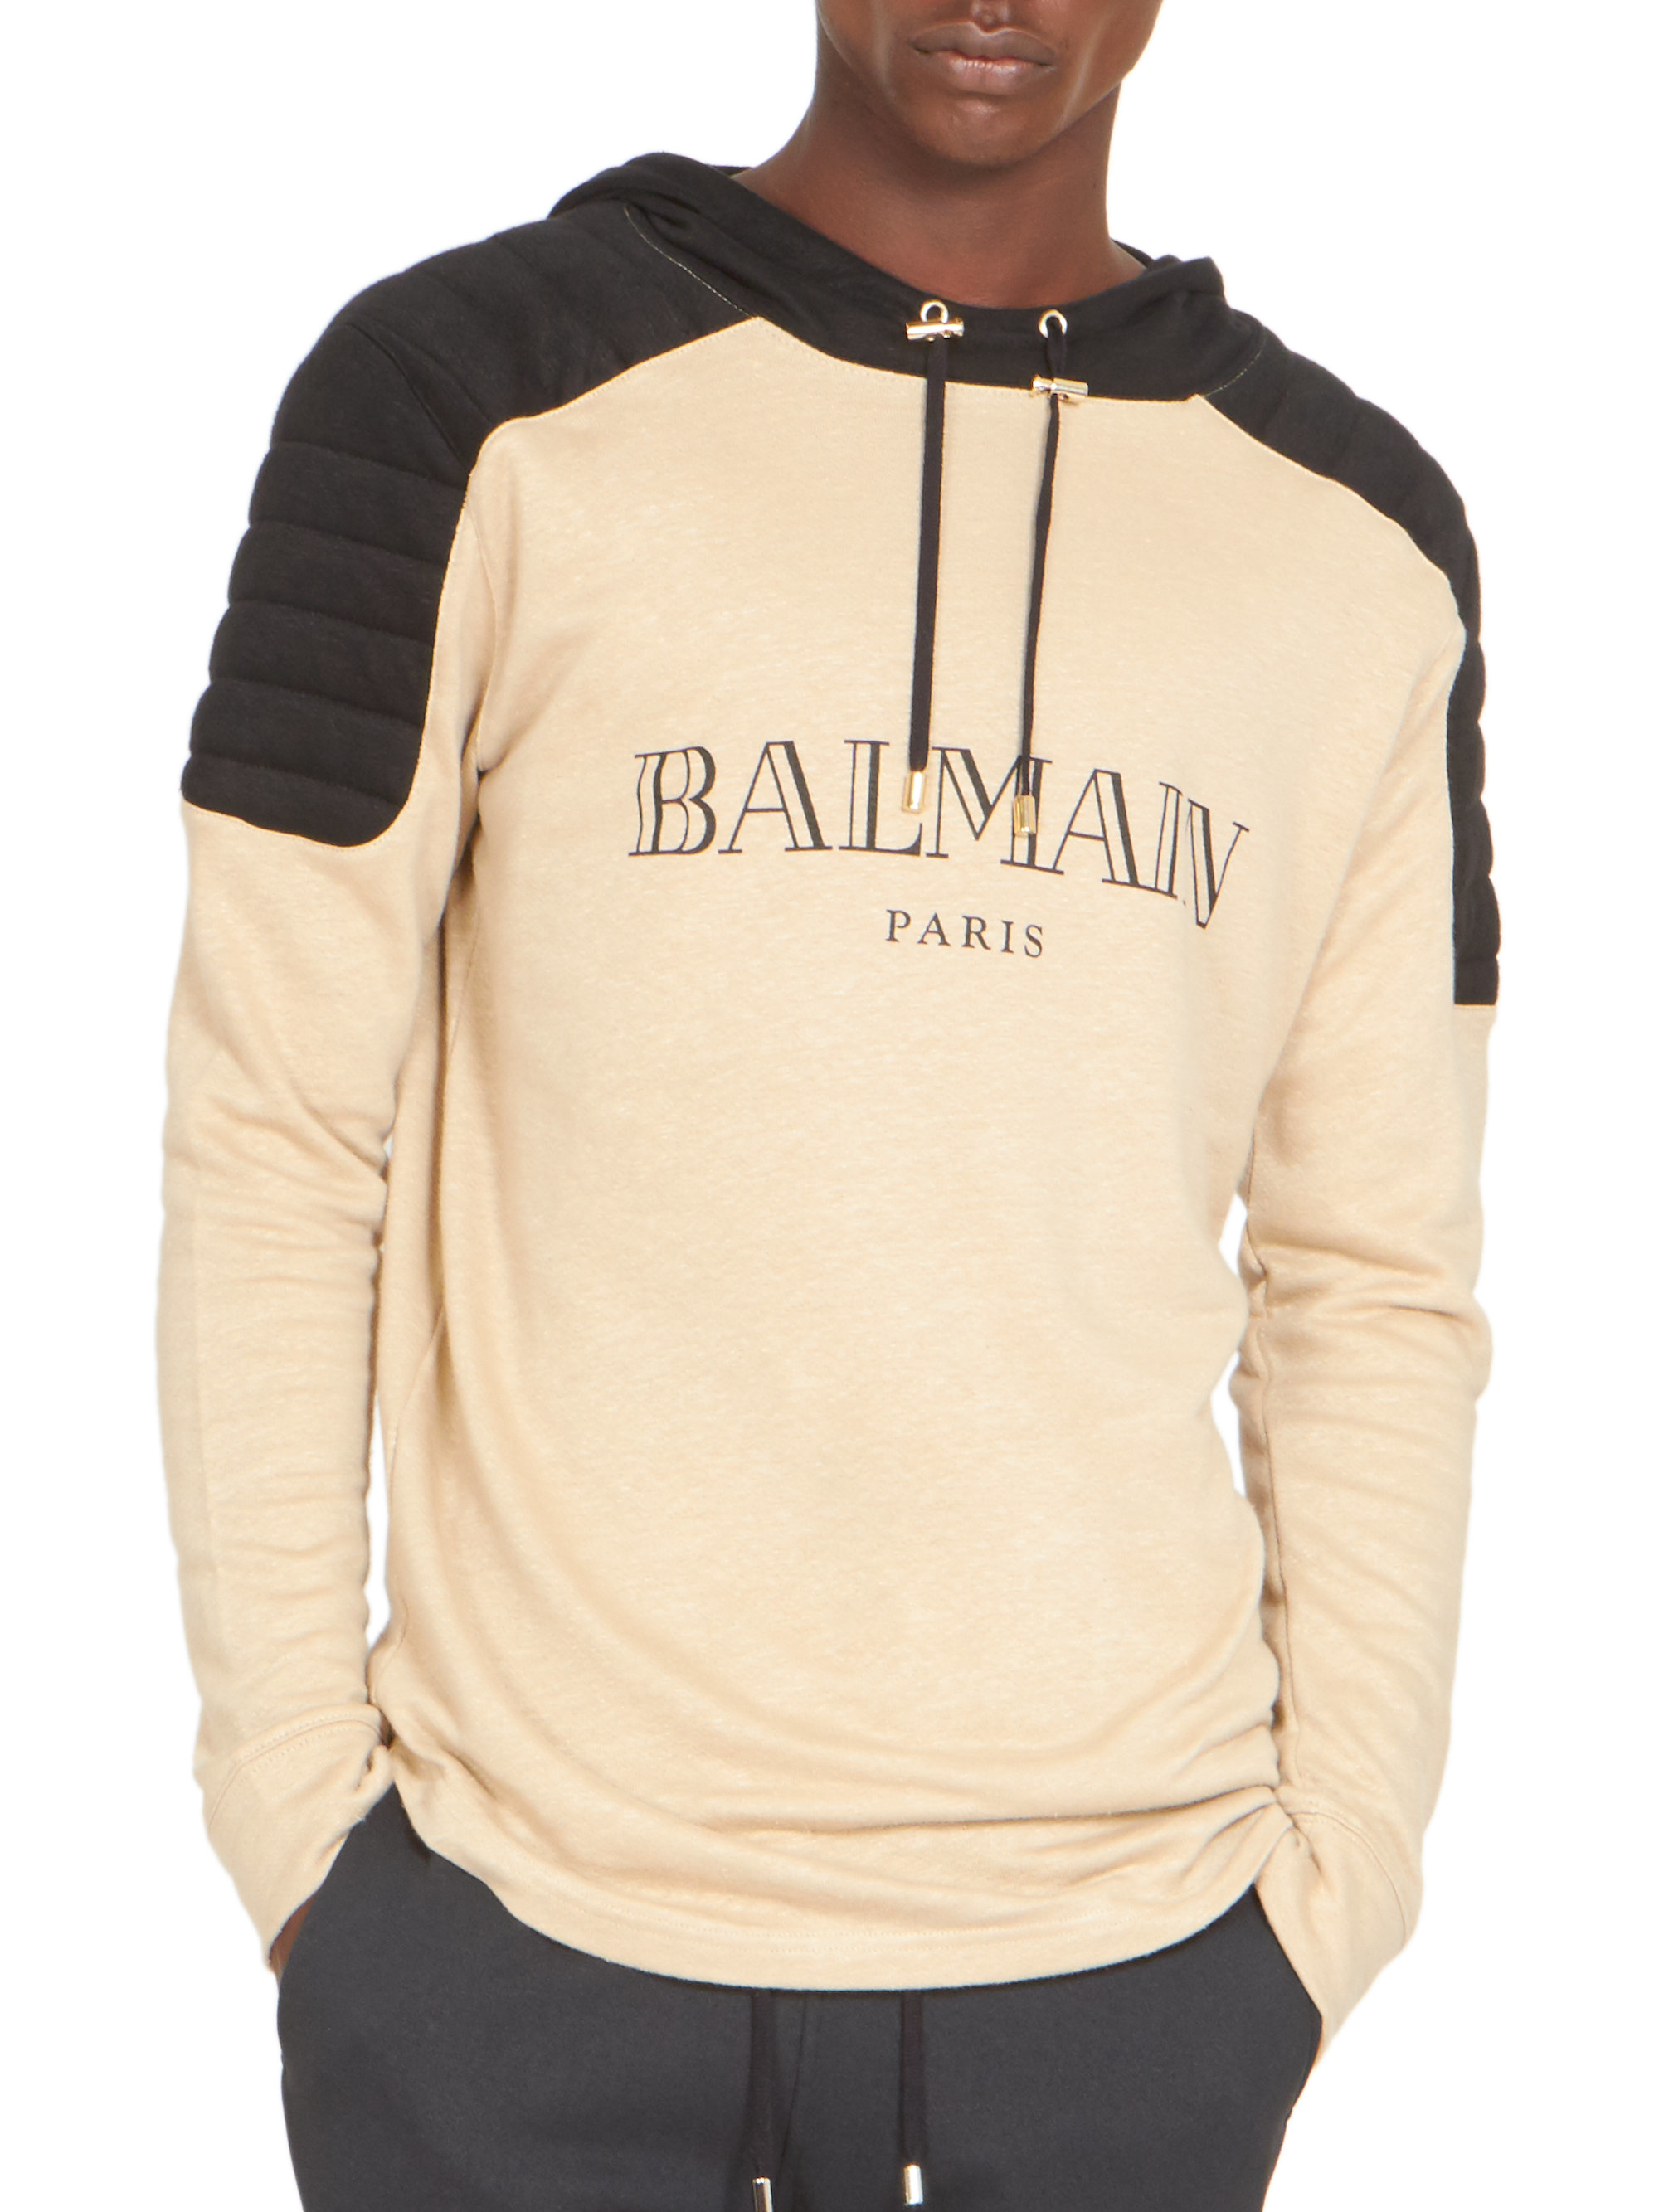 Balmain Logo Biker Sweatshirt in Natural for Men - Lyst